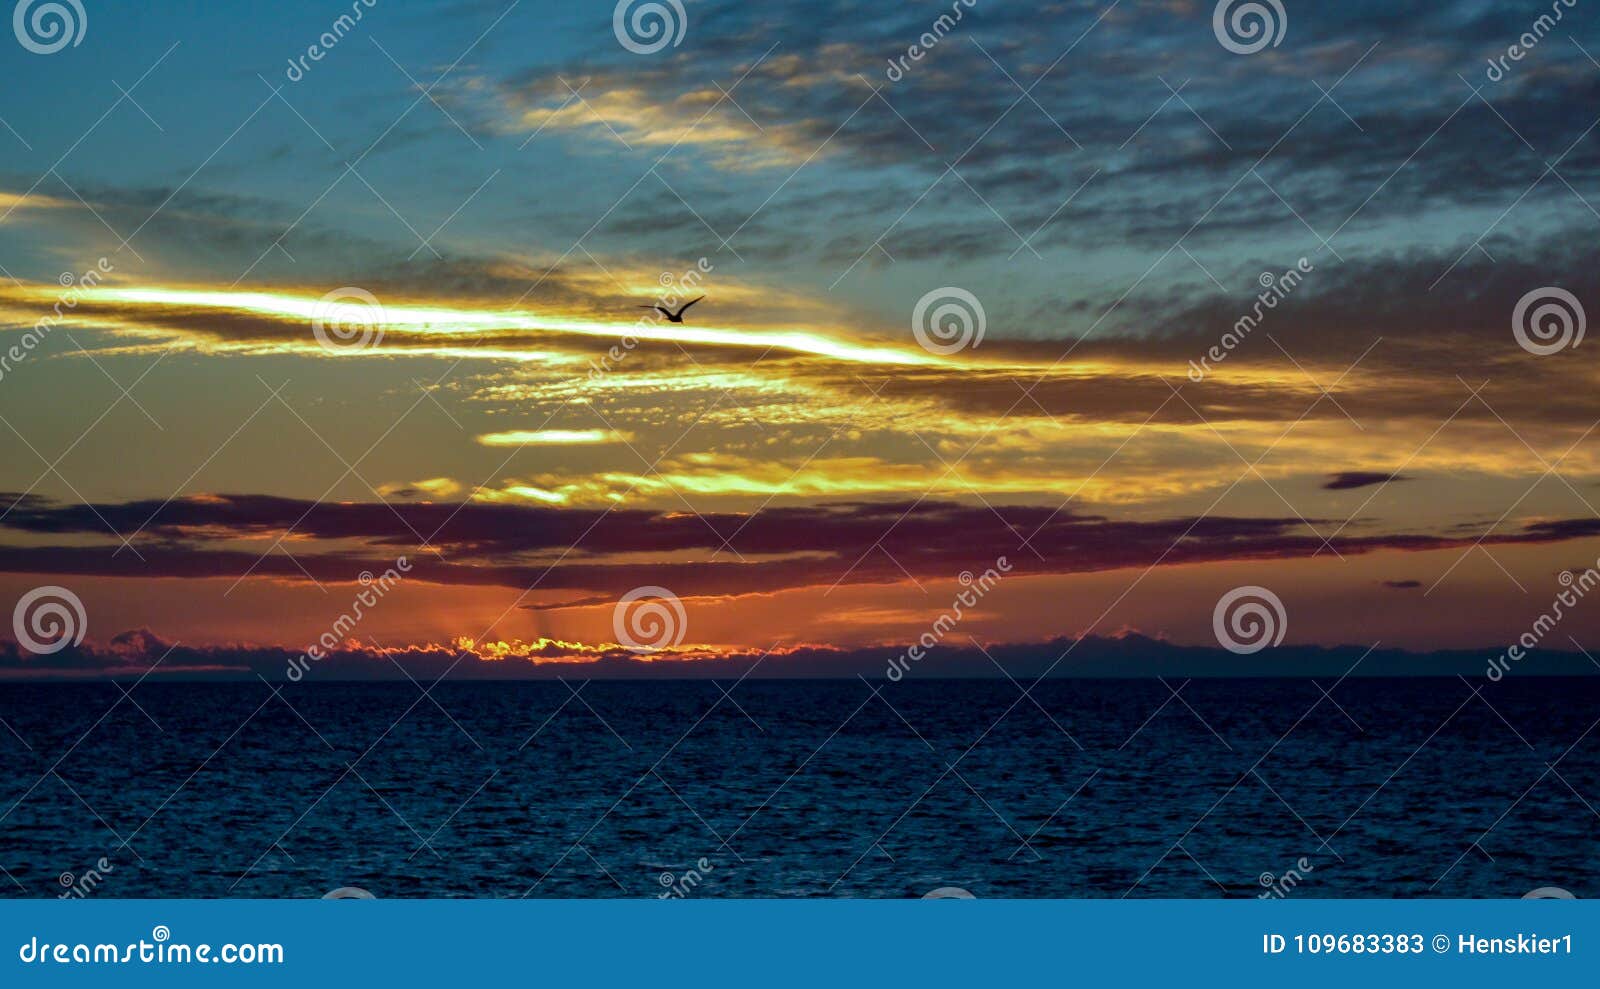 puerto penasco sunset looking towards baja 2